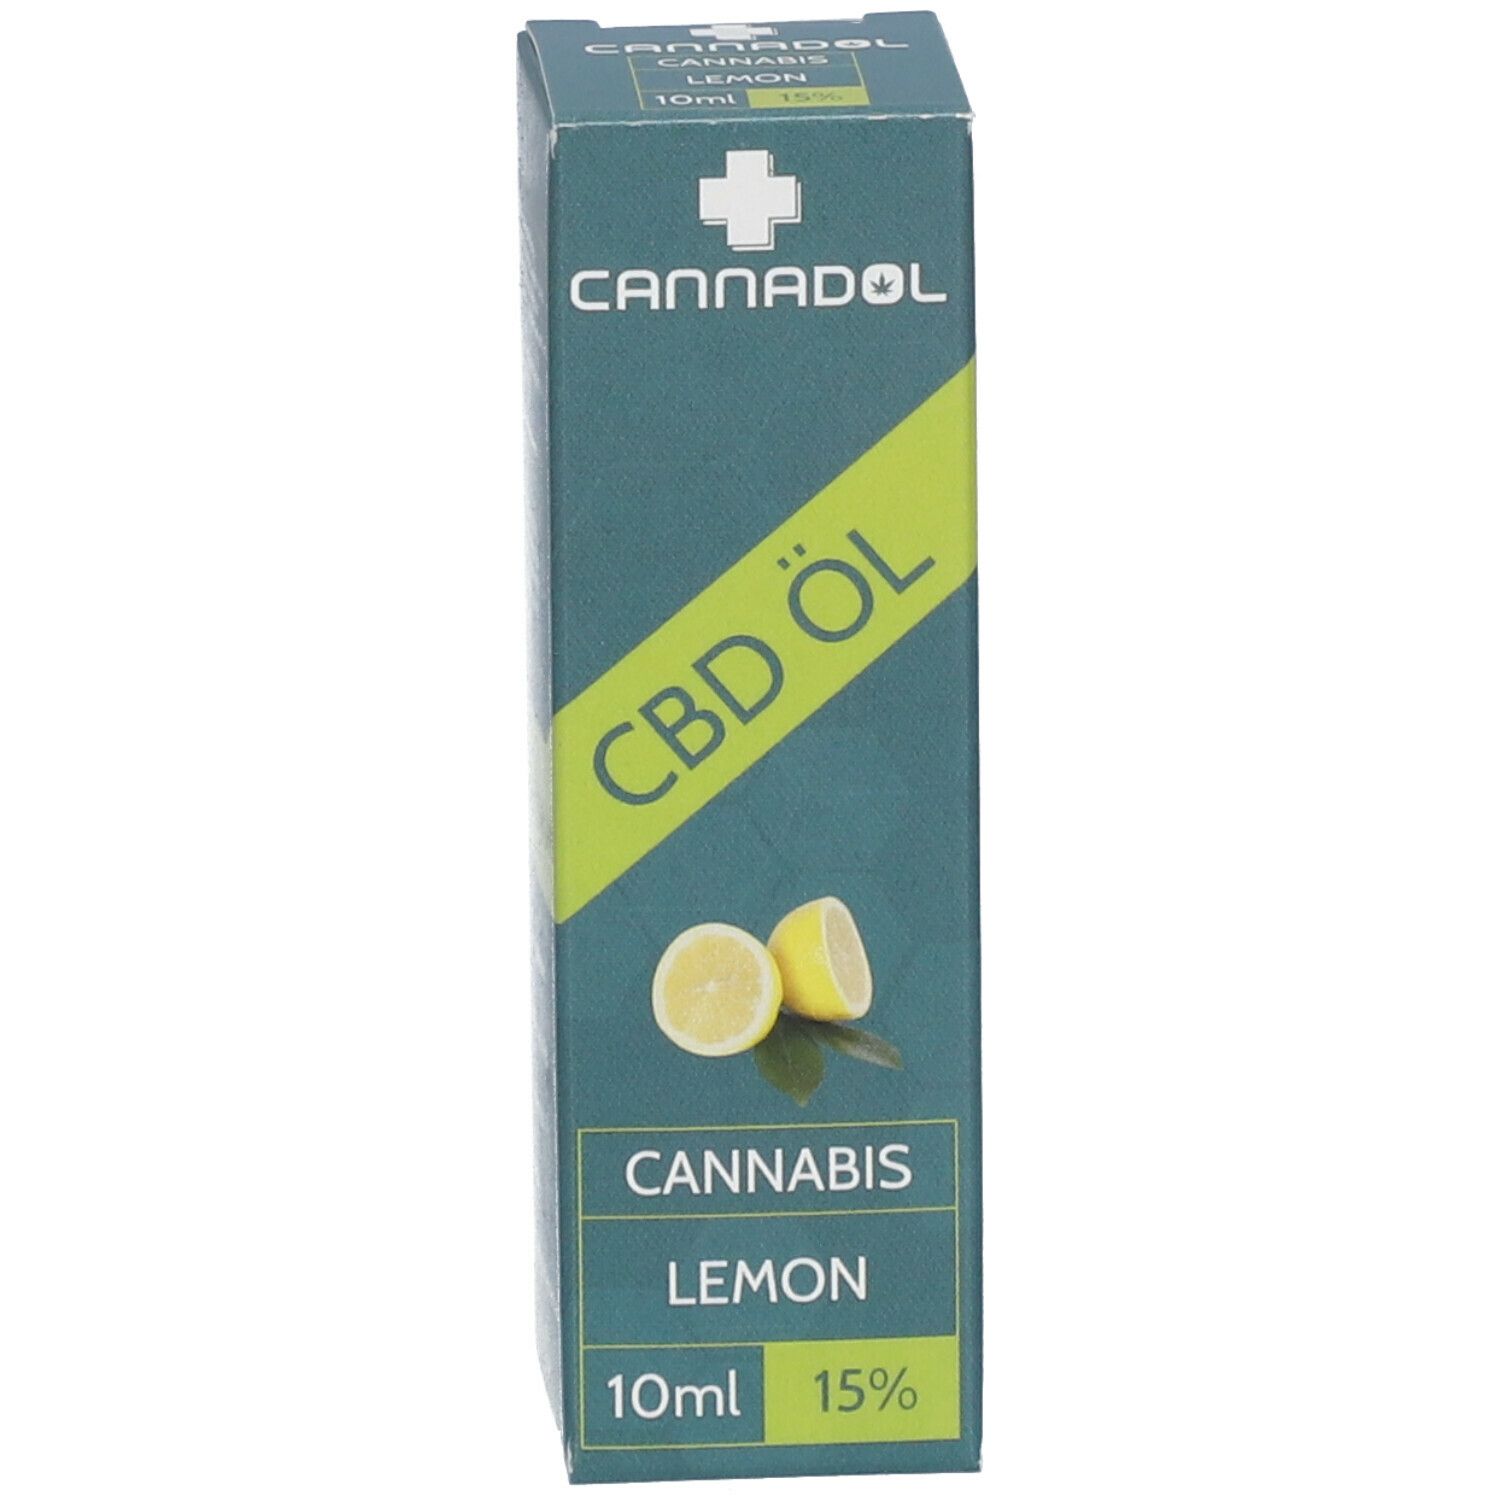 CANNADOL Cannabis Lemon 15 %